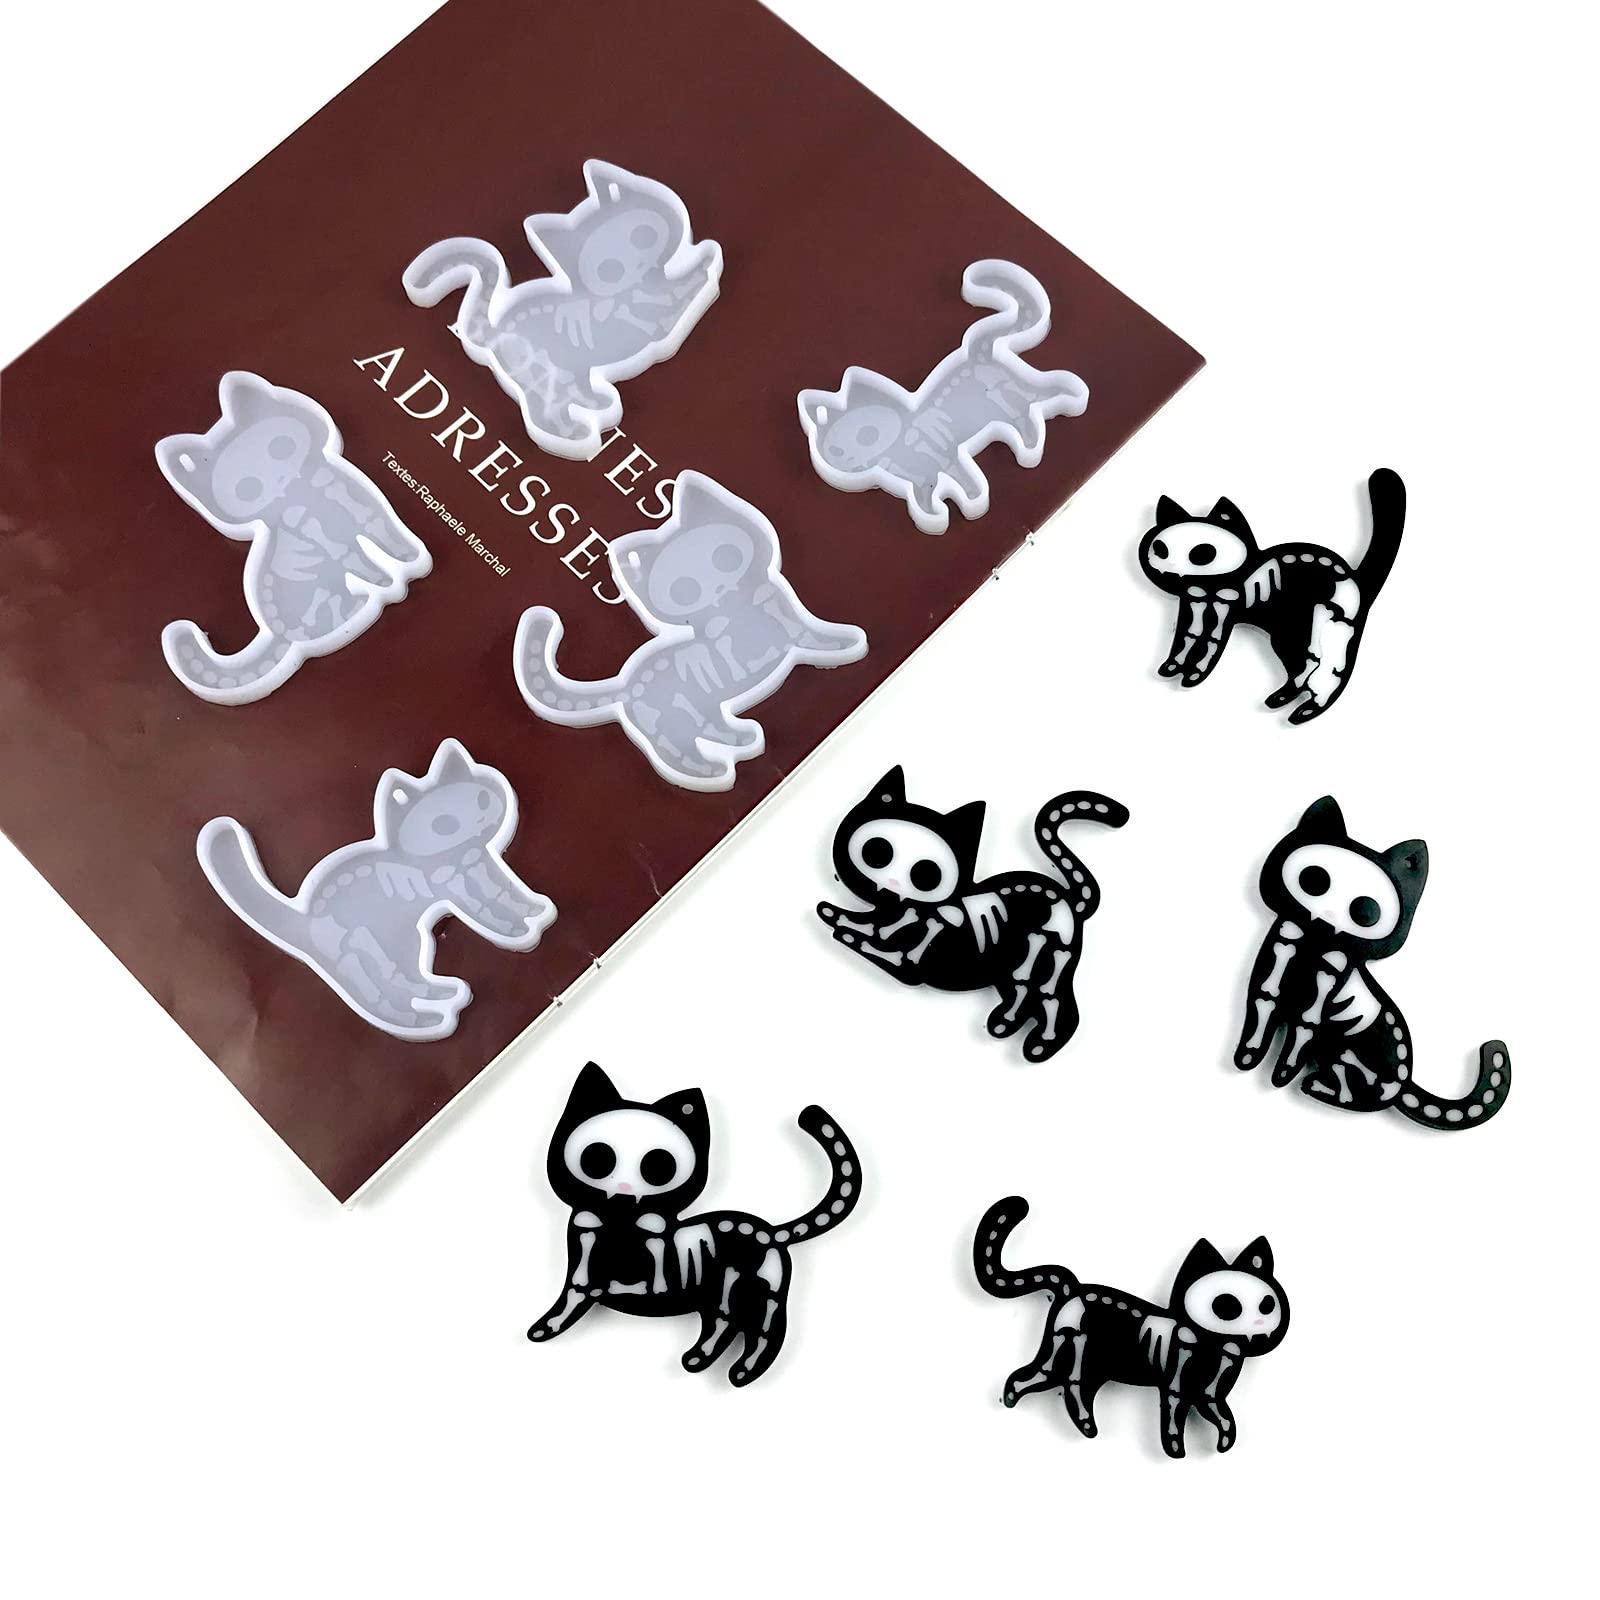 5pcs Kitten Shape Keychain Jewelry Accessory Resin Mold